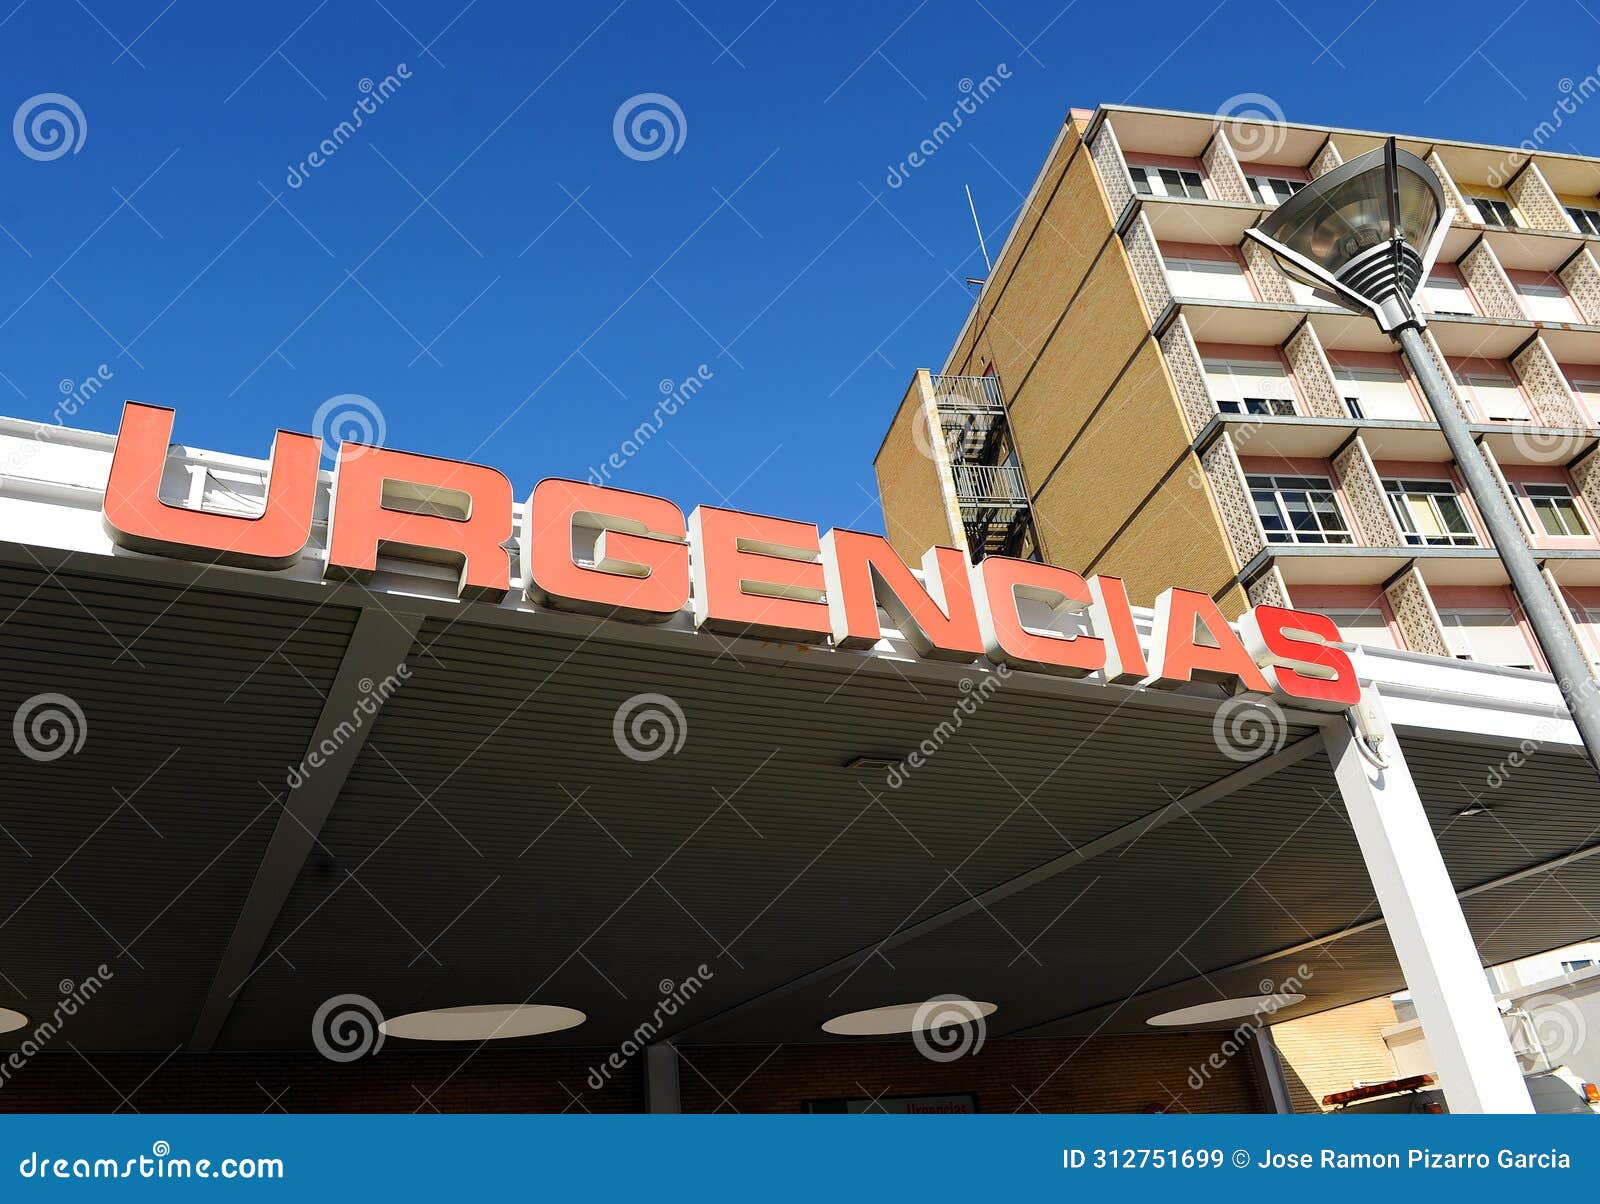 emergency services -urgencias- at the virgen del rocio hospital in seville, spain